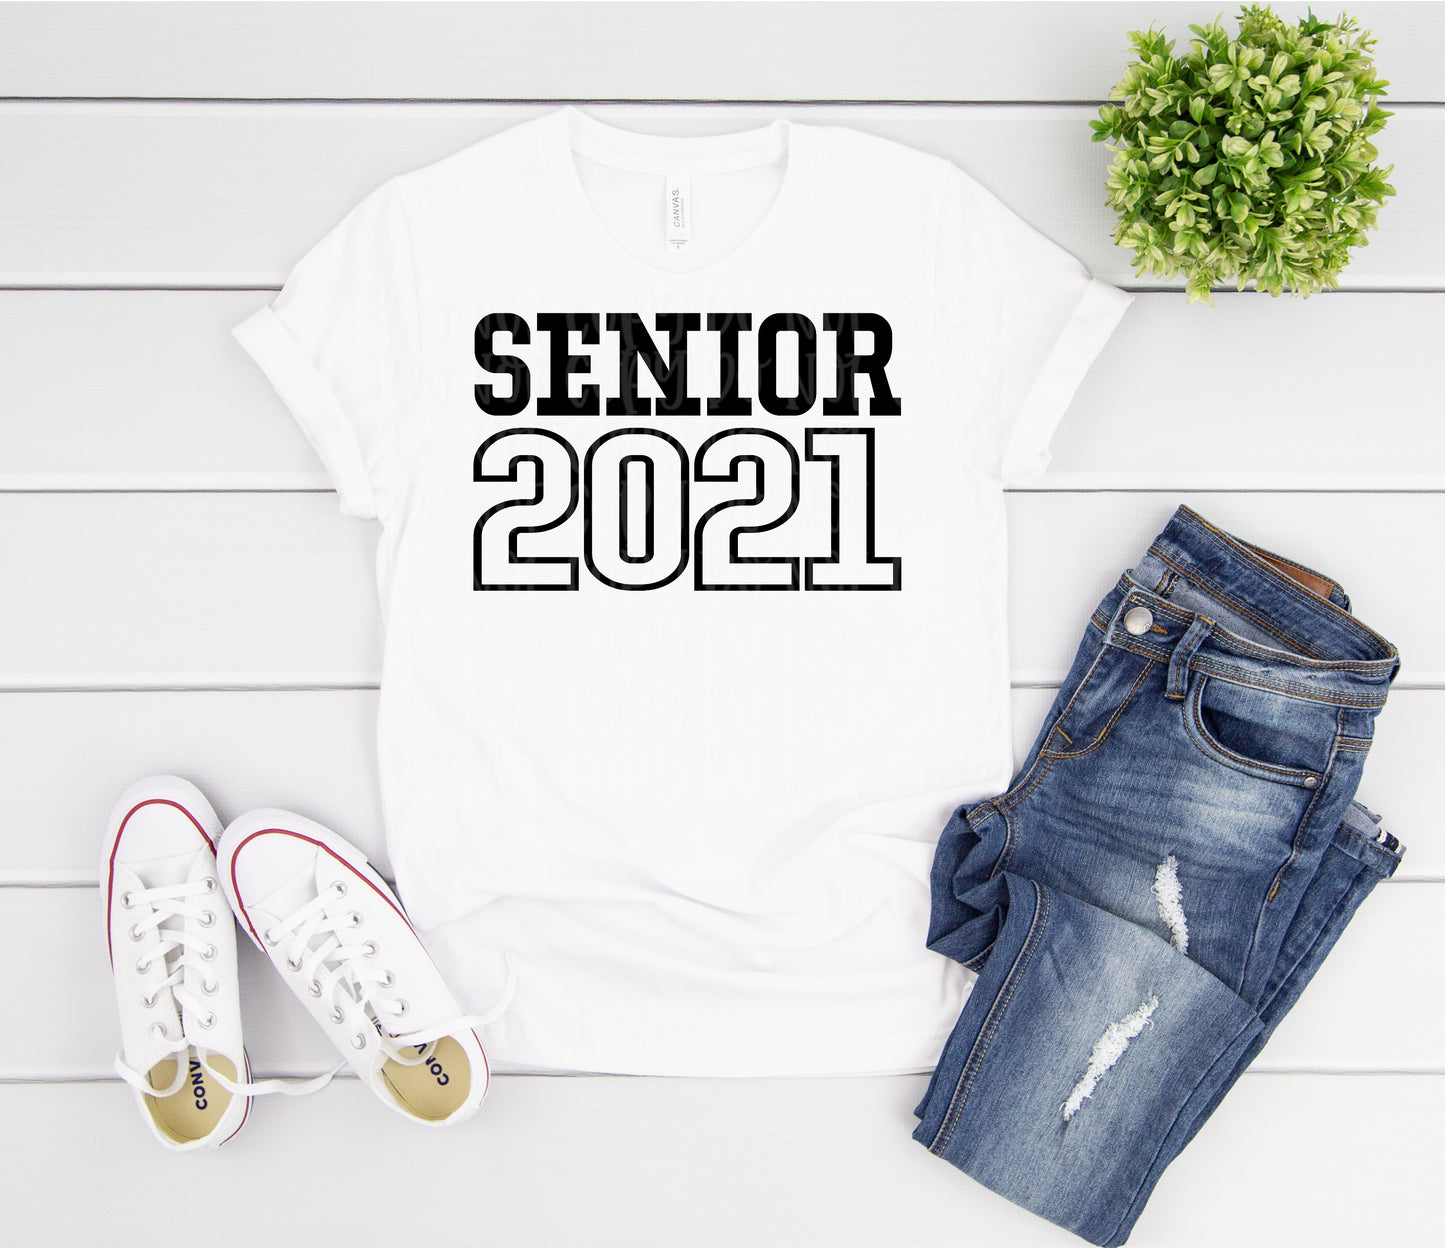 Senior 2021 (1)